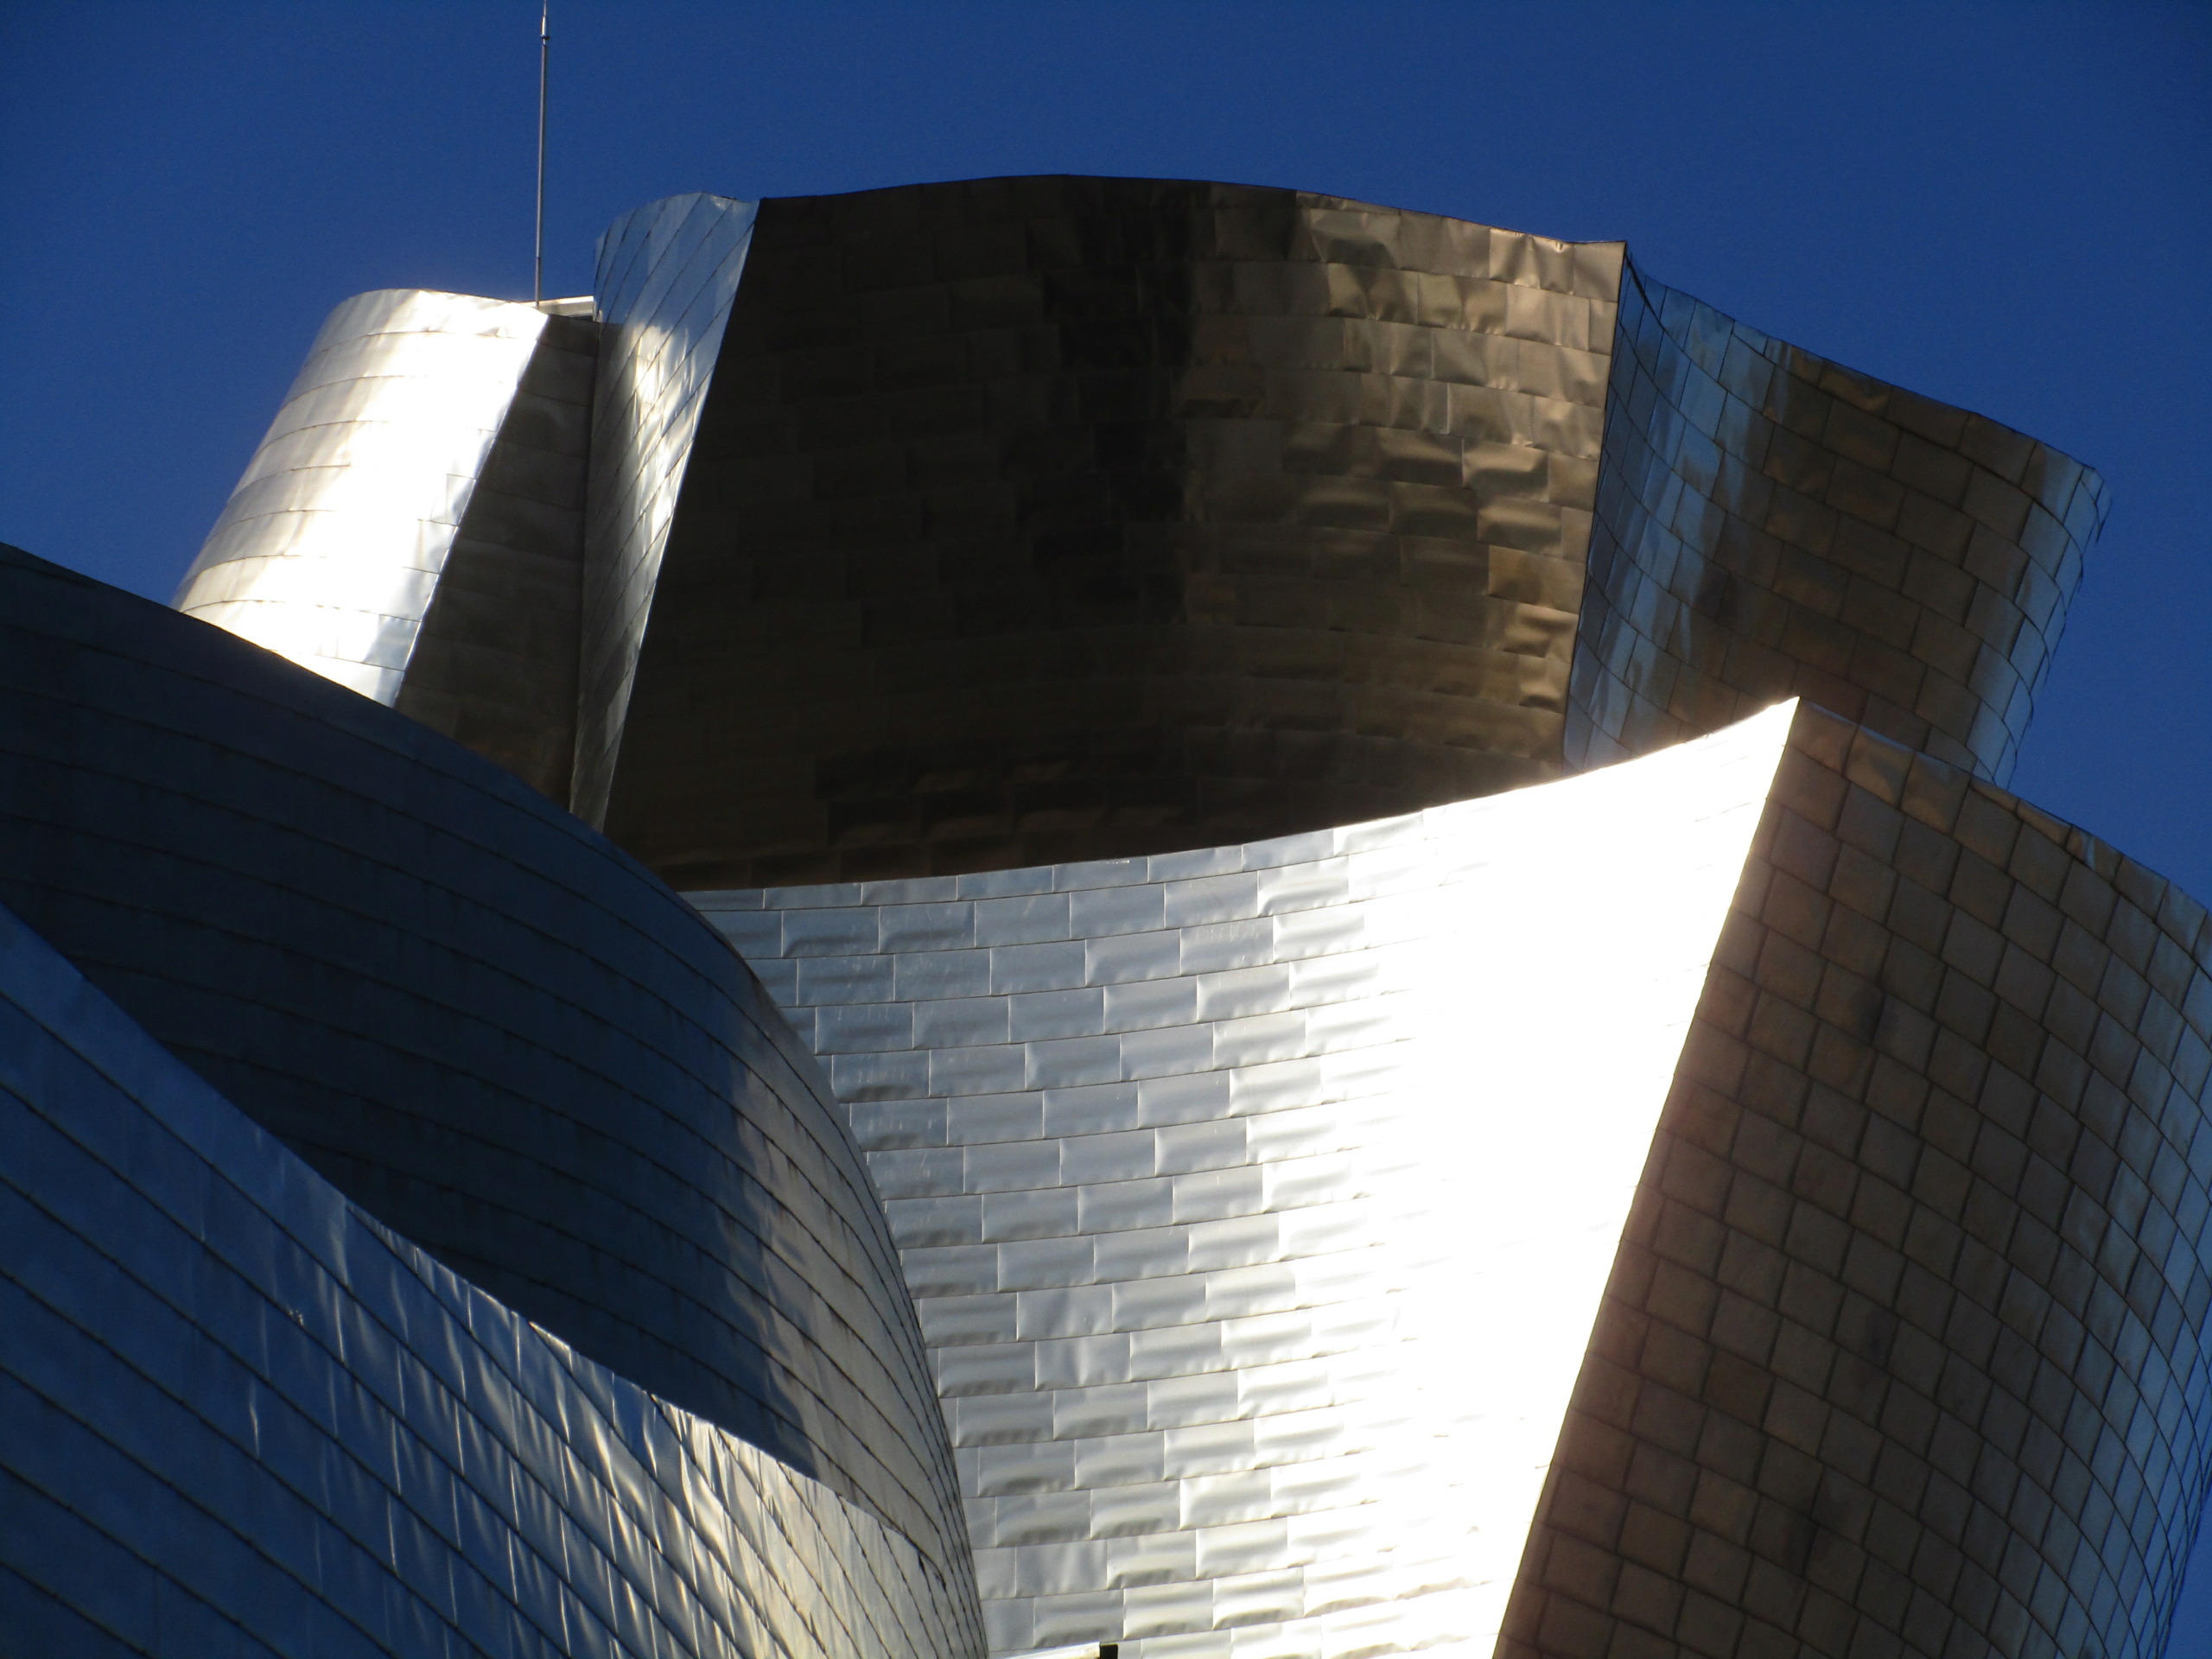 bilbao - Musée Guggenheim à Bilbao, Espagne - Page 2 20161016